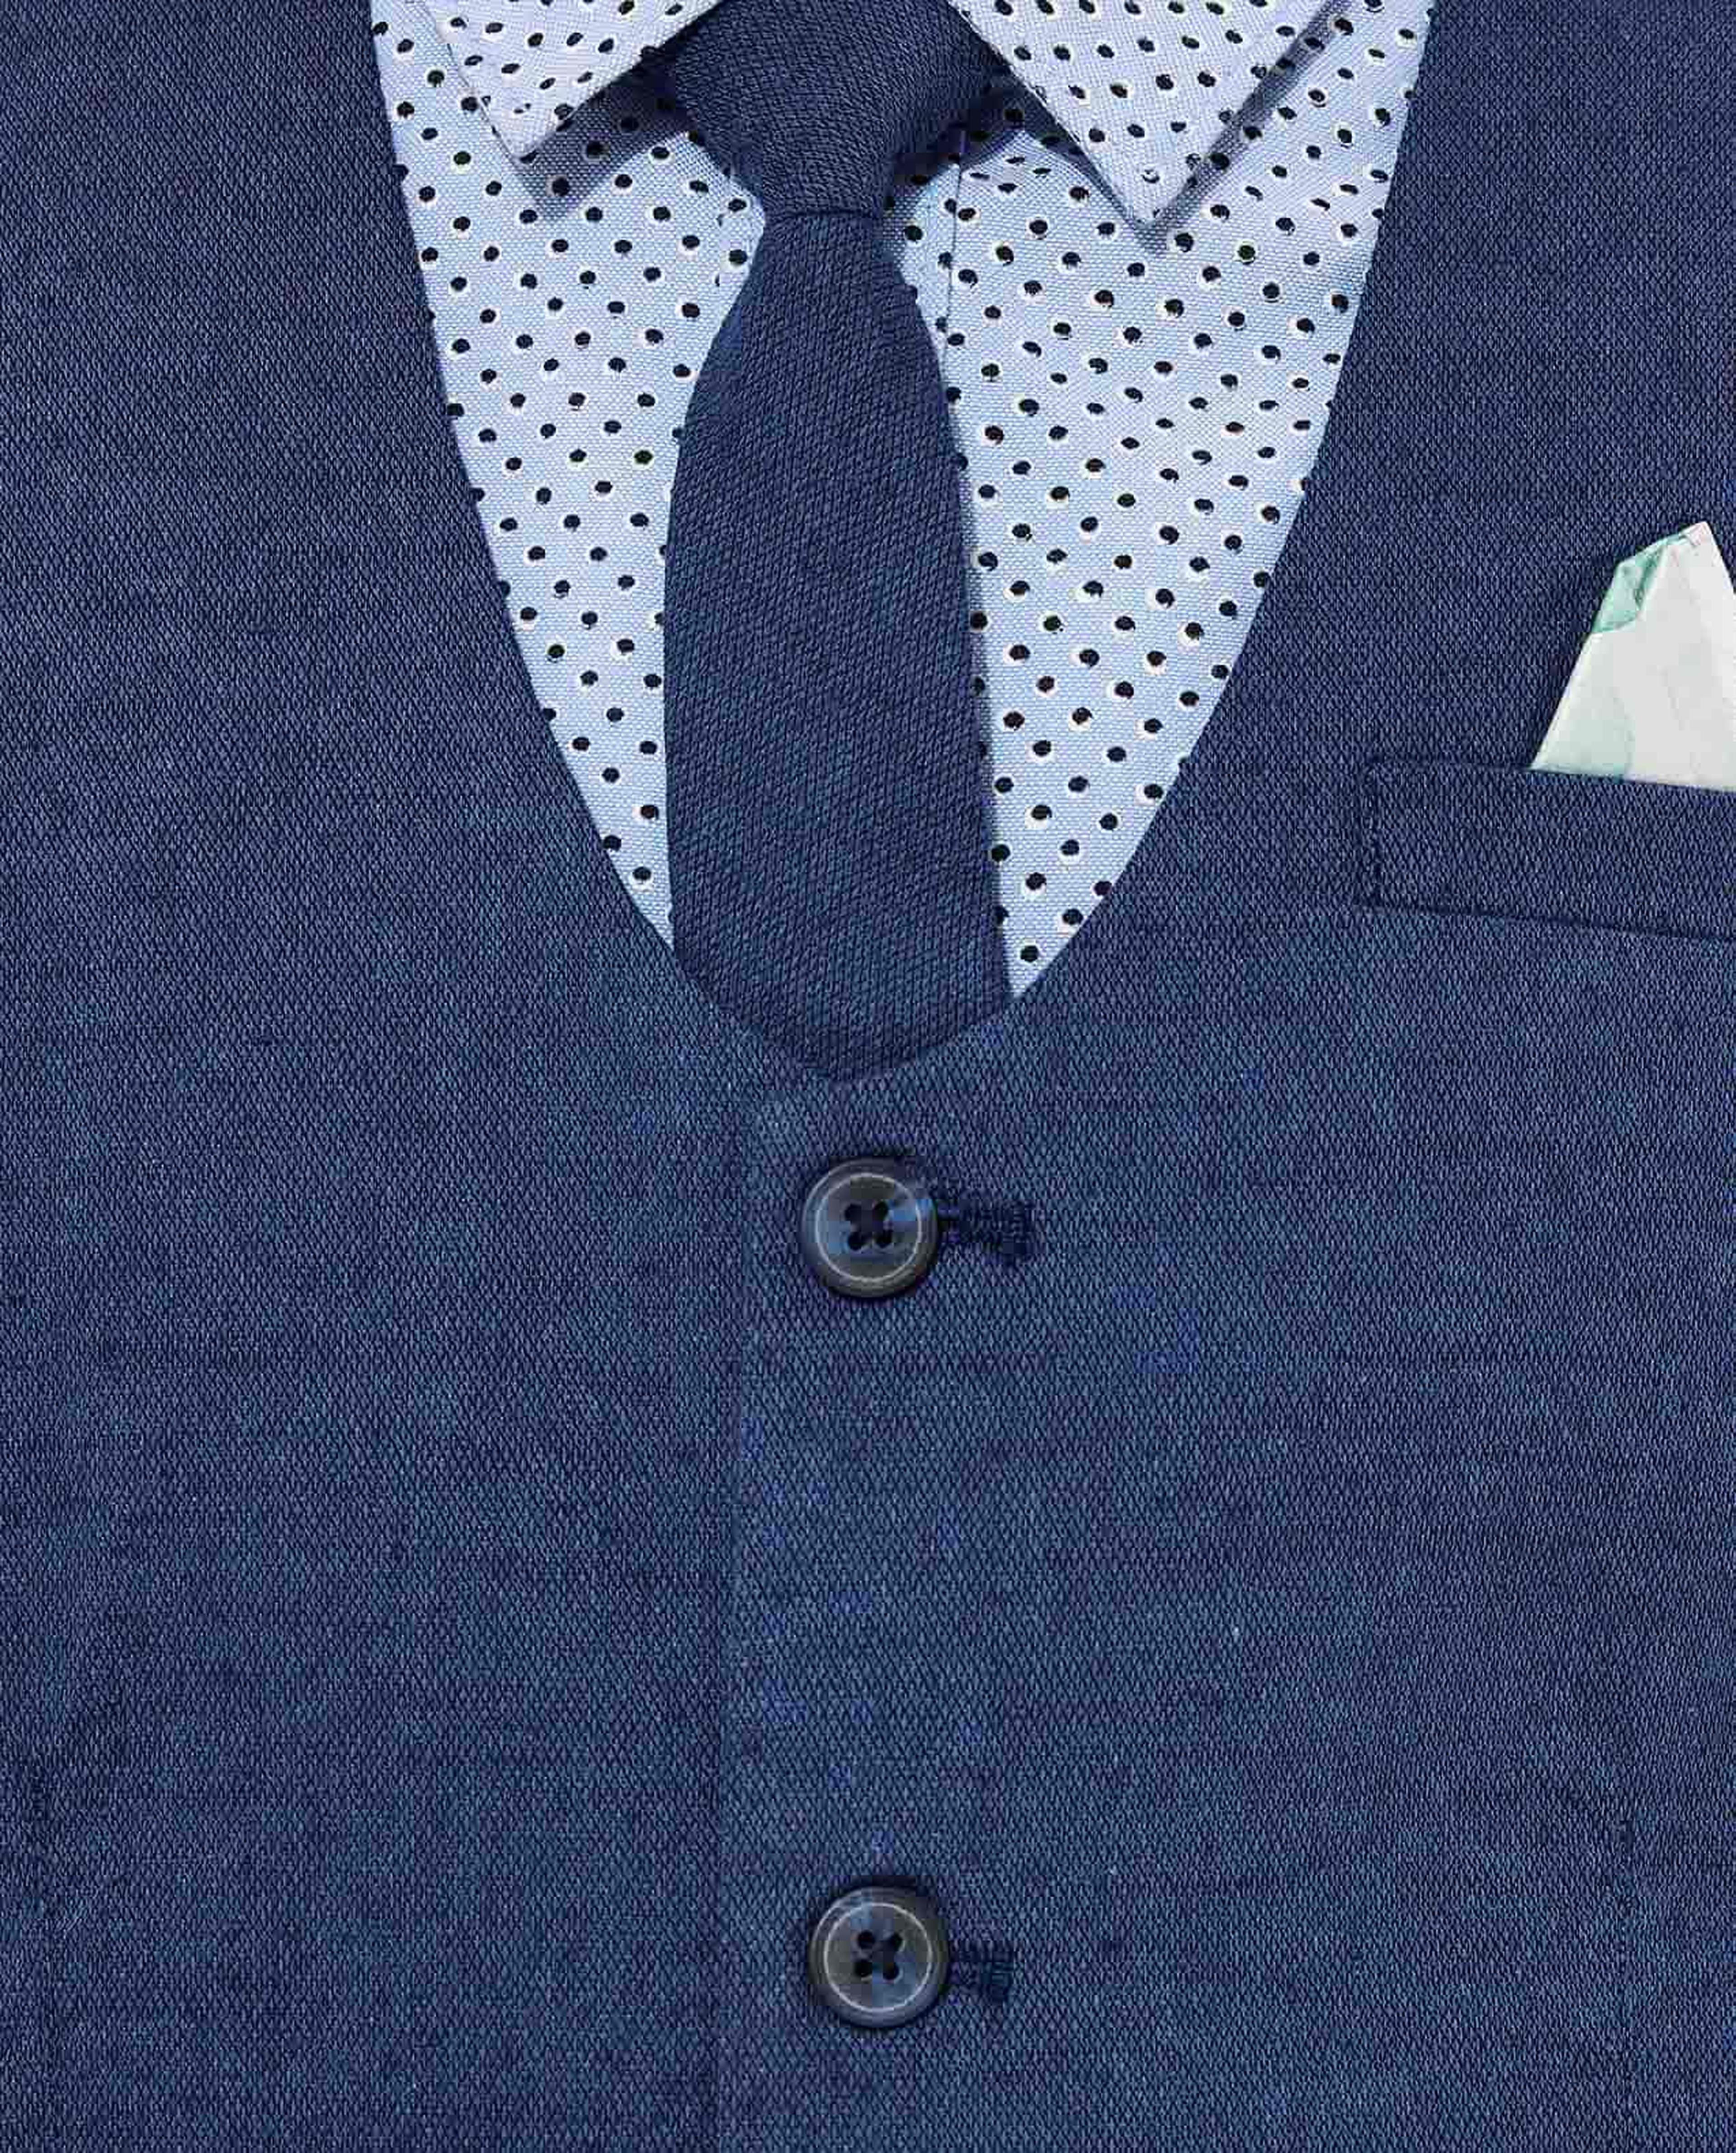 3 Piece Printed Shirt| Waistcoat and Tie Set